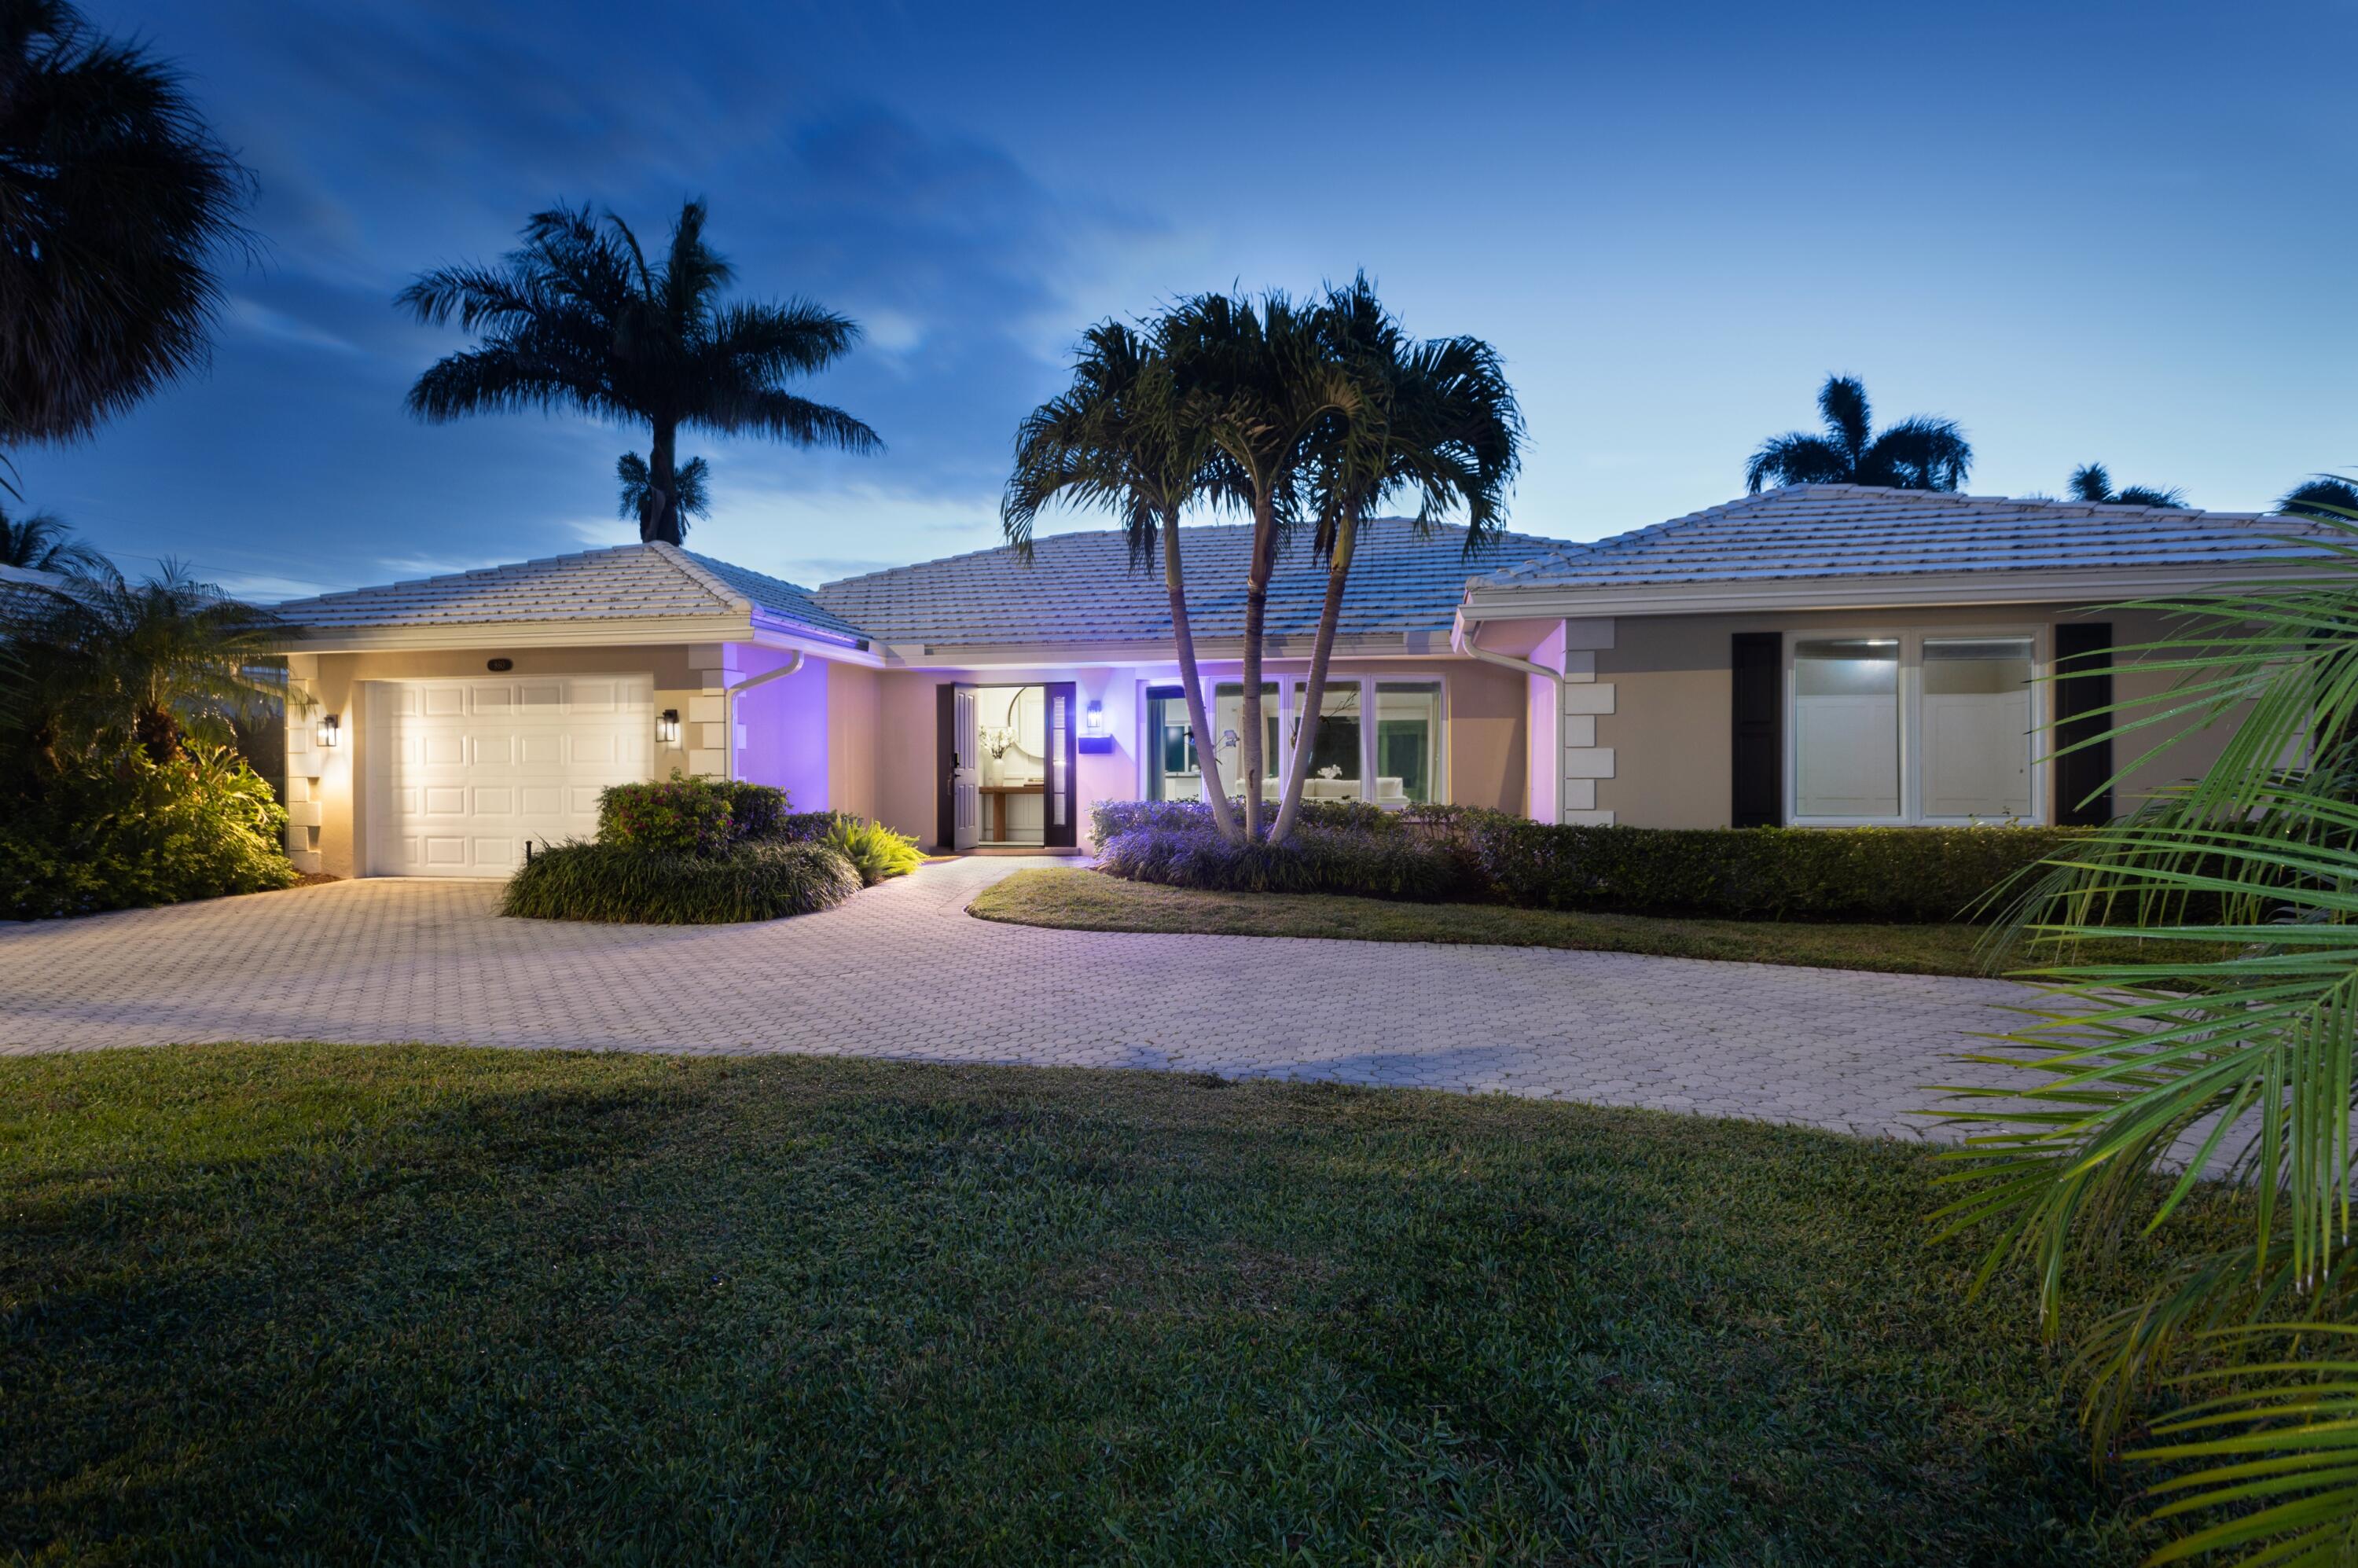 860 Cypress Way, Boca Raton, Palm Beach County, Florida - 3 Bedrooms  
3 Bathrooms - 